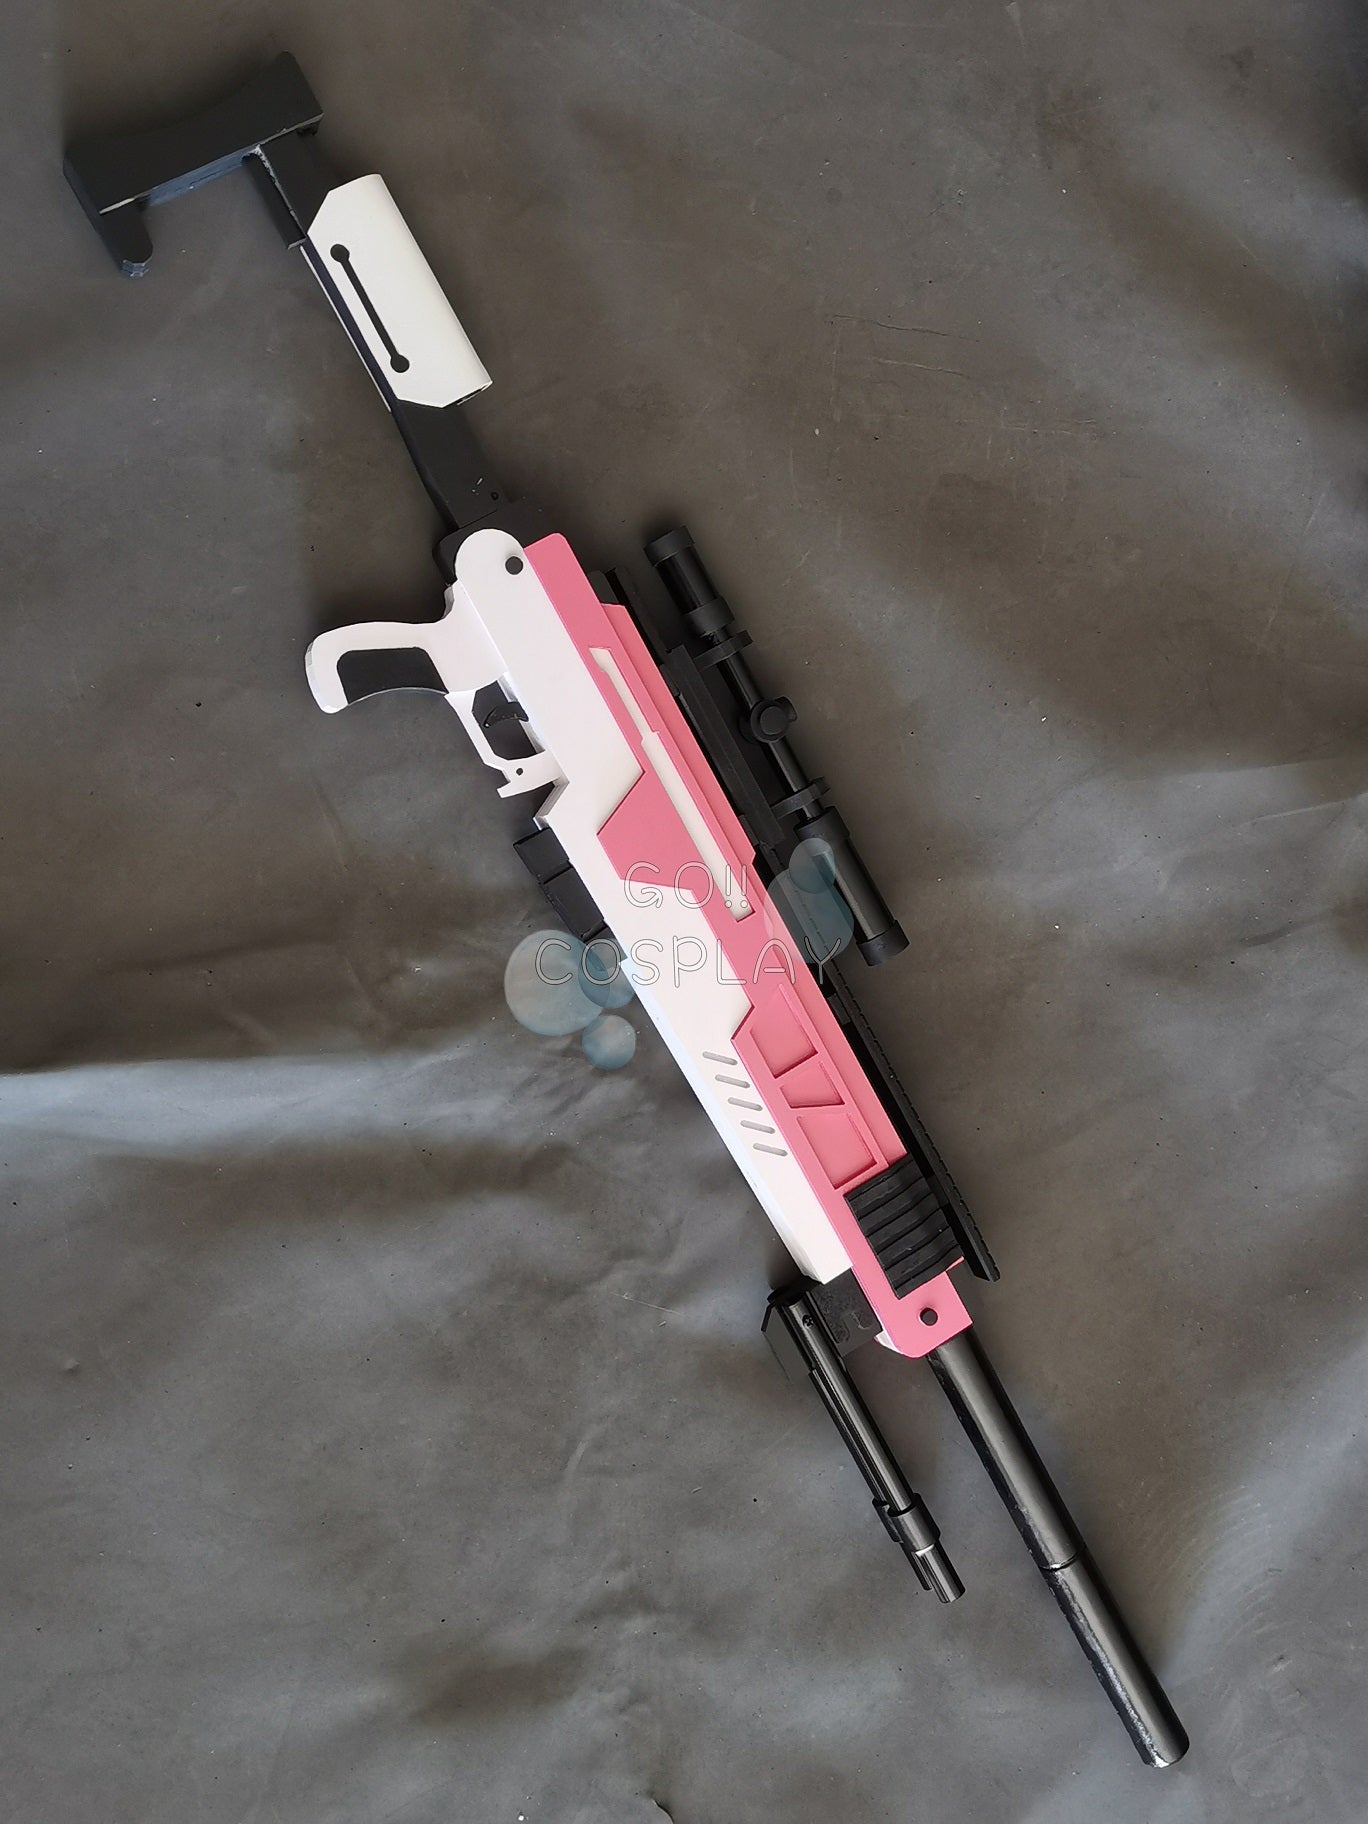 NIKKE Alice Weapon Replica Cosplay Gun Buy